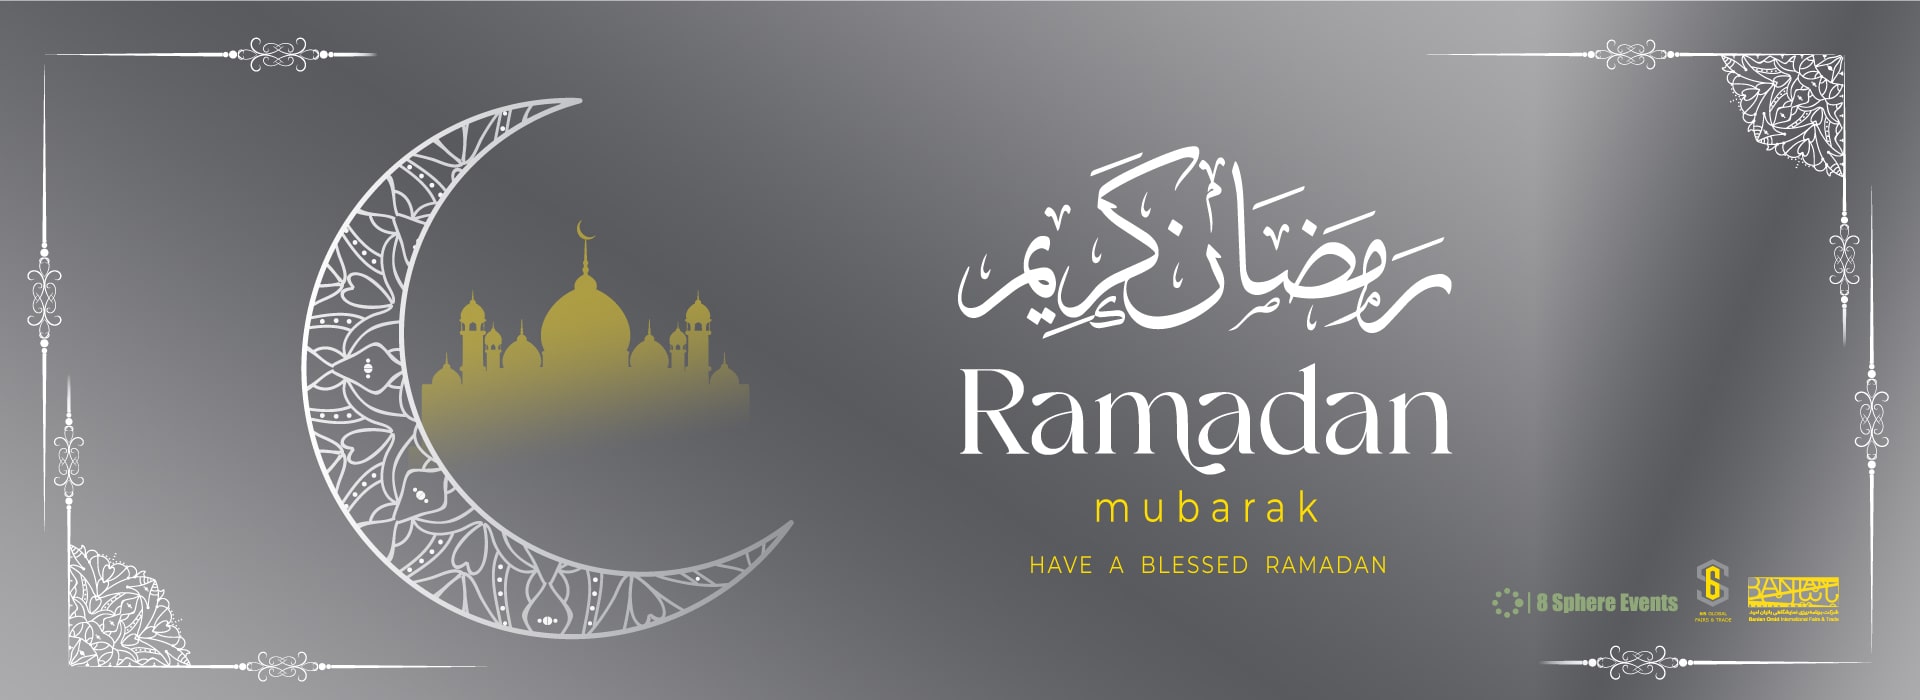 Ramadan-1402-2